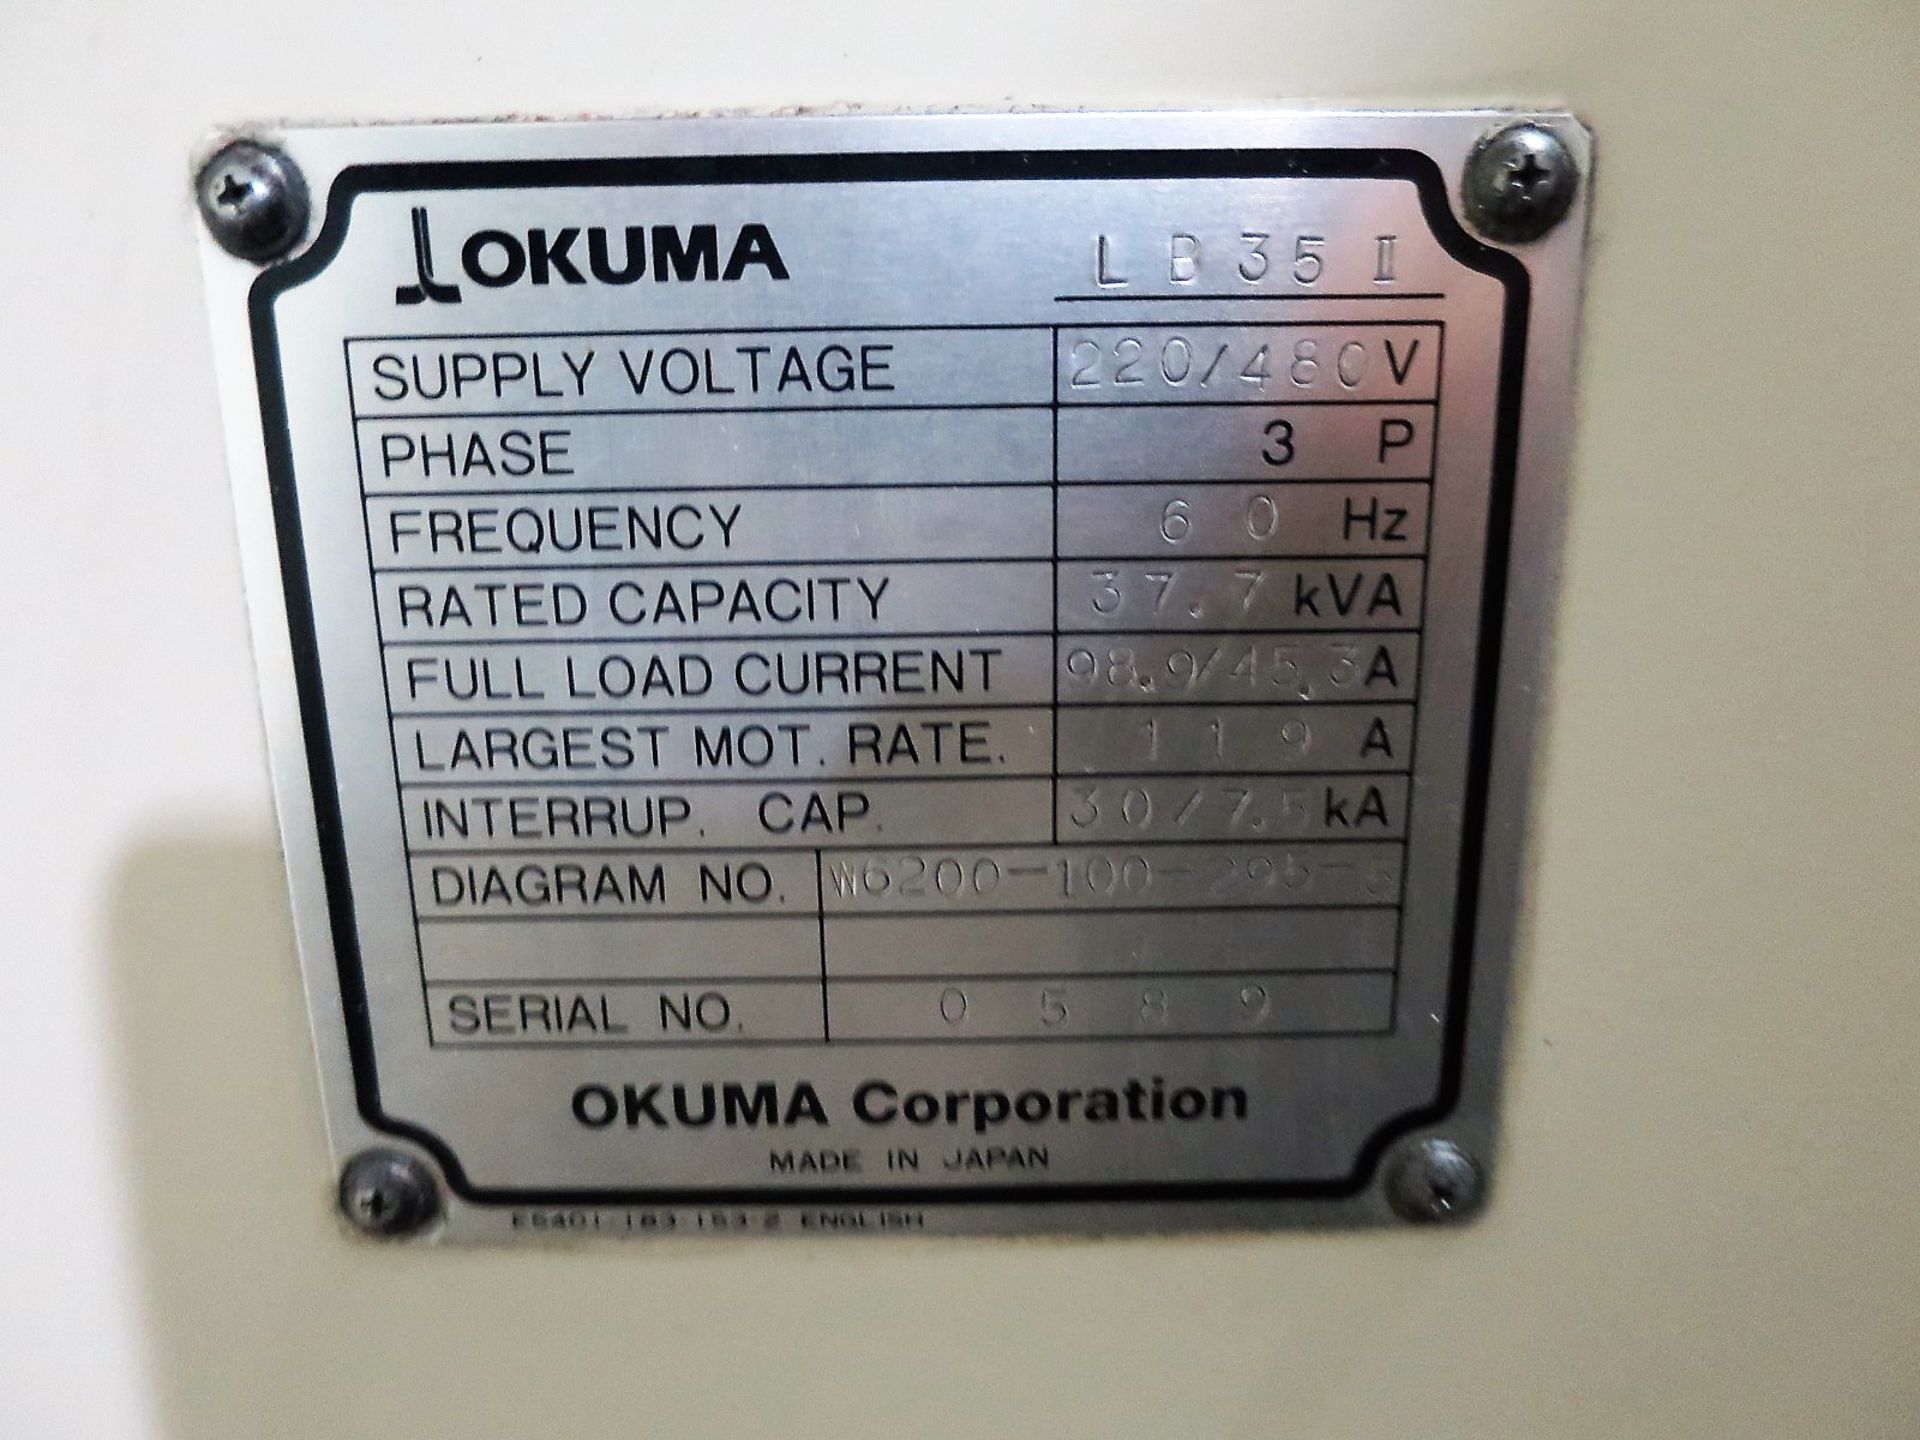 Okuma LB35II CNC 2-Axis Turning Center, S/N 0589, New 2000 - Image 9 of 10